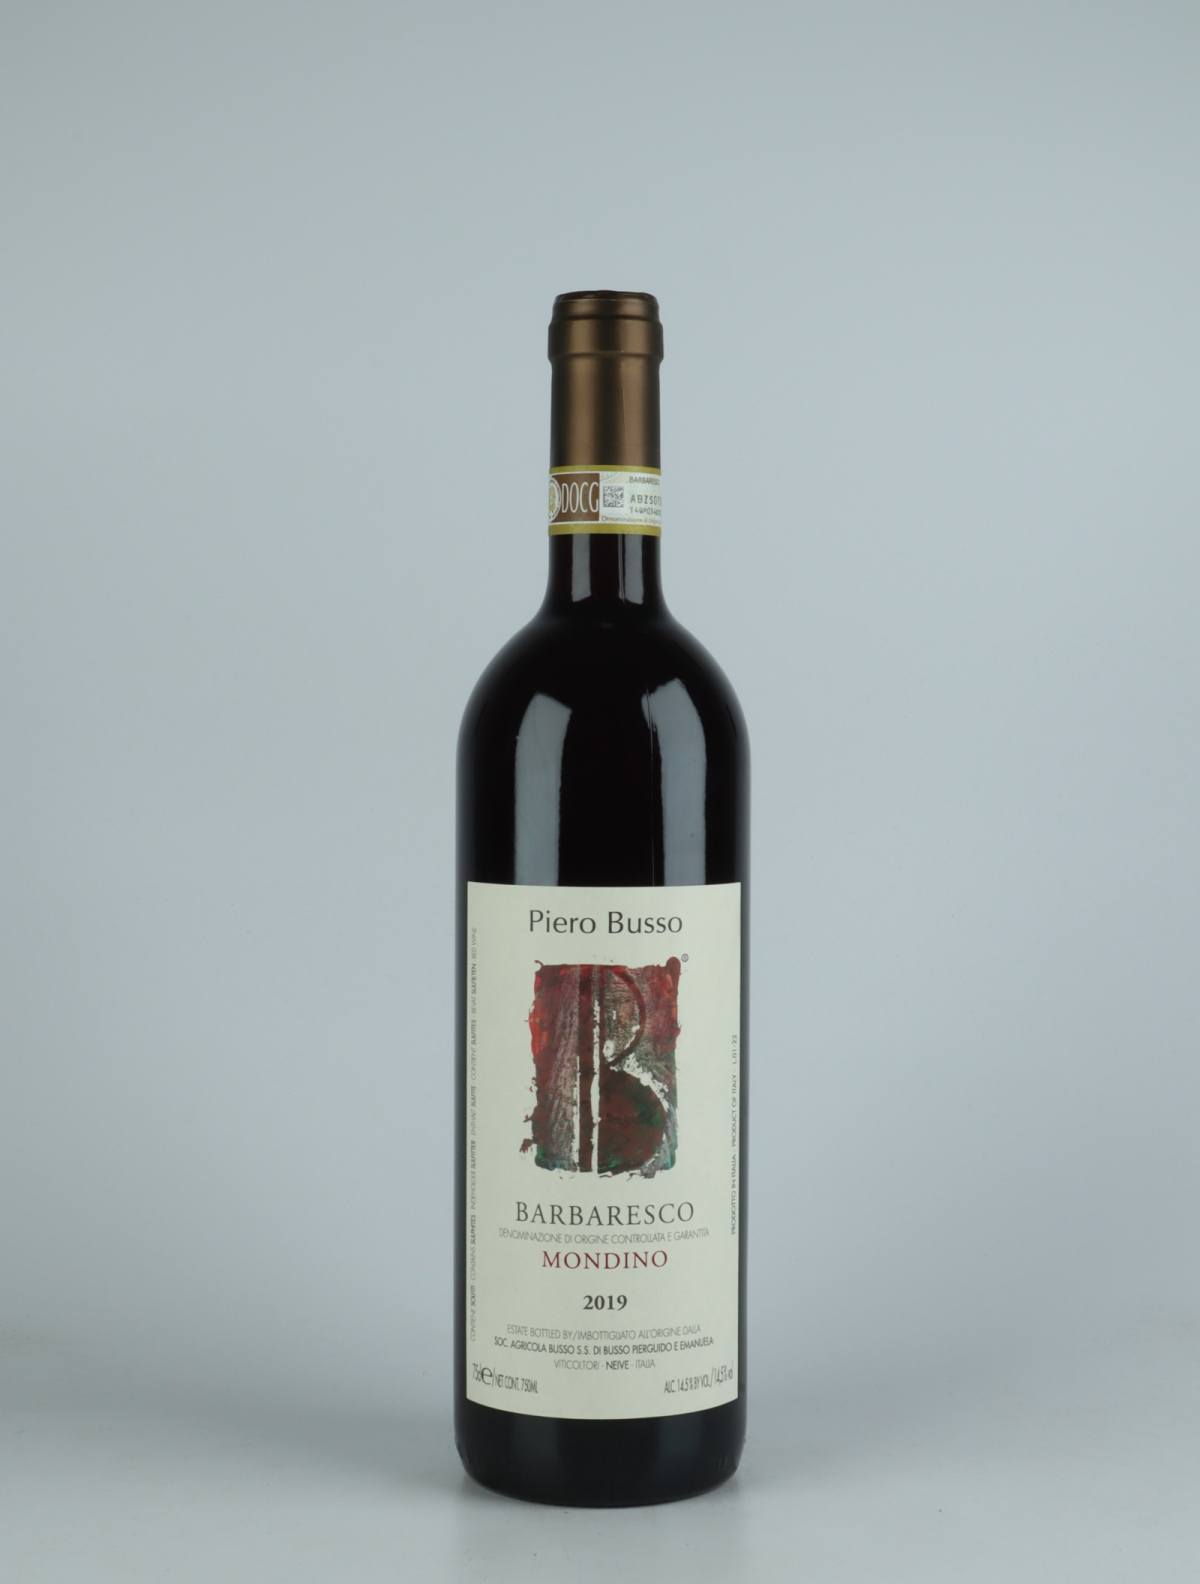 A bottle 2019 Barbaresco Mondino Red wine from Piero Busso, Piedmont in Italy